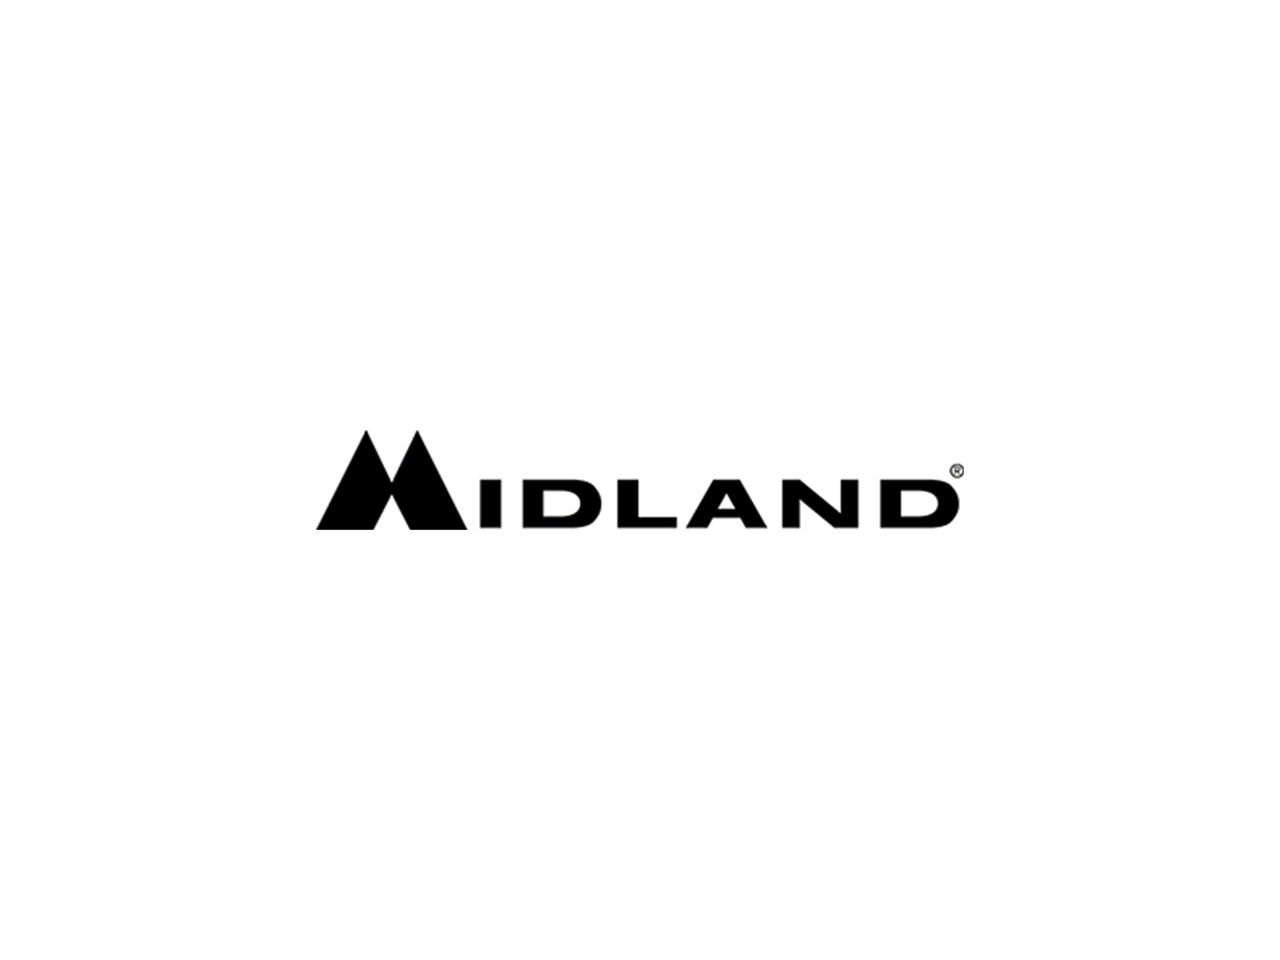 Midland Radio Parts